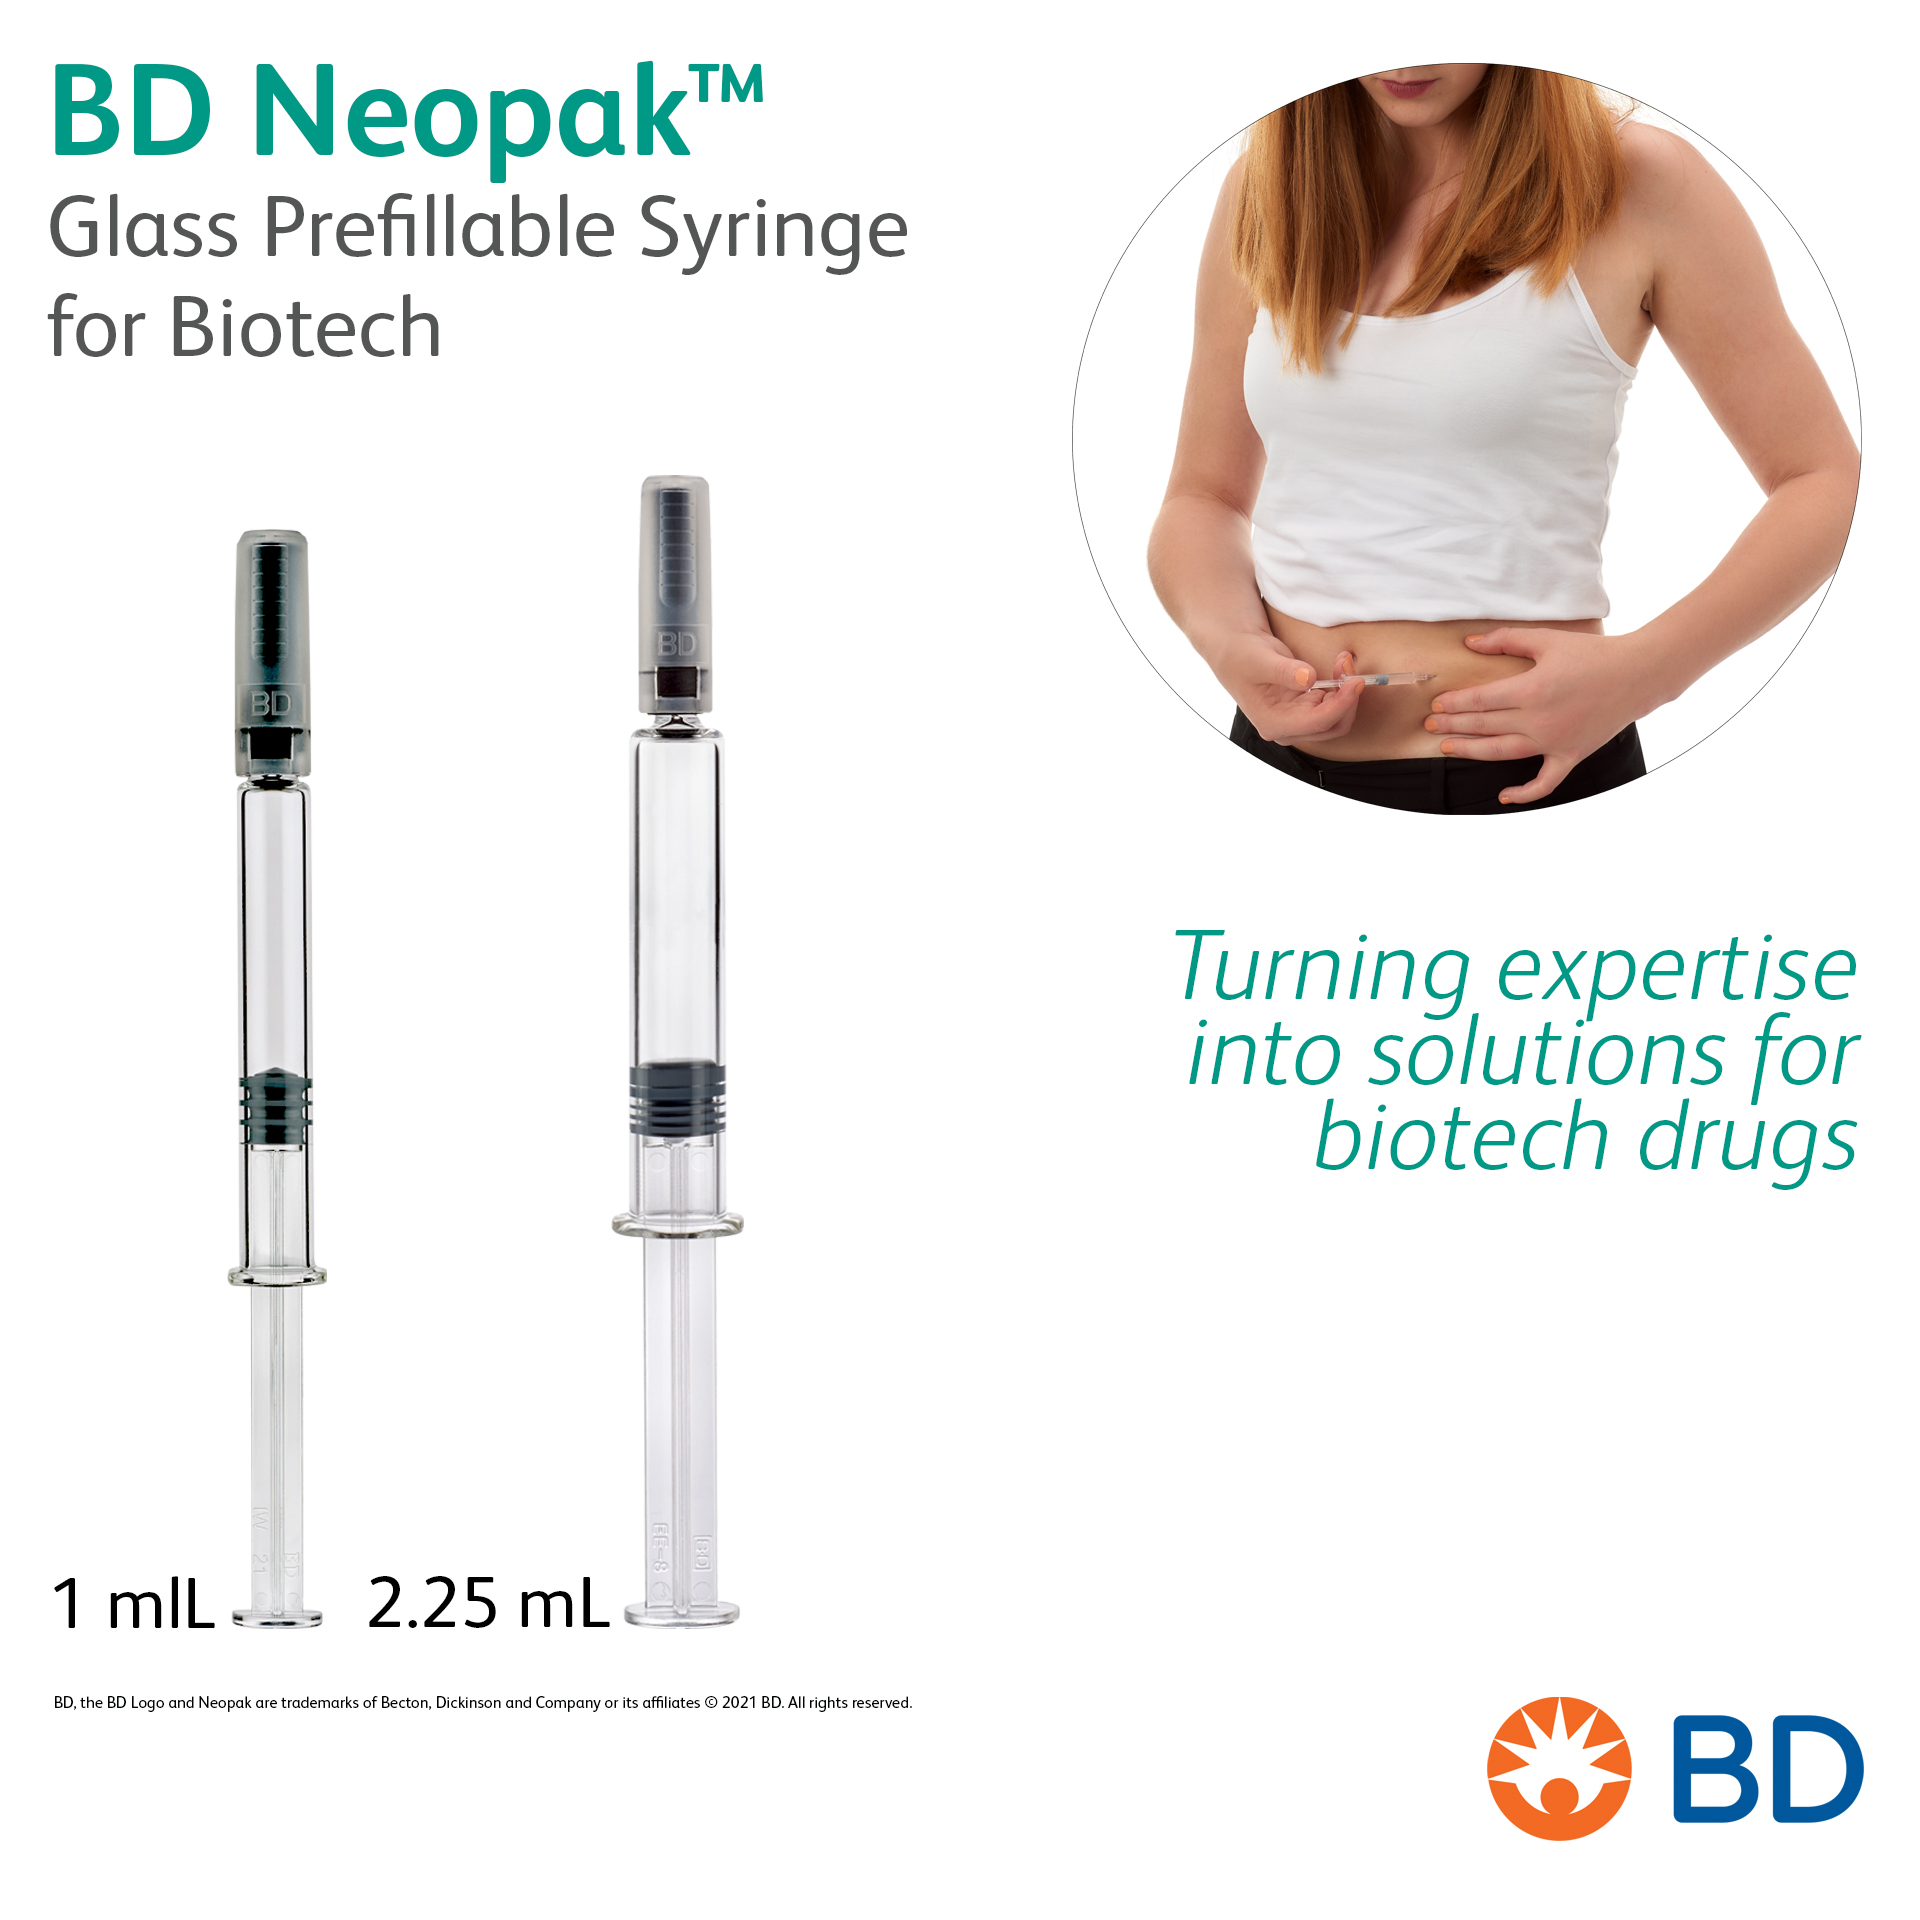 BD Neopak™ Glass Prefillable Syringe for Biotech - Turning expertise into solutions for biotech drugs